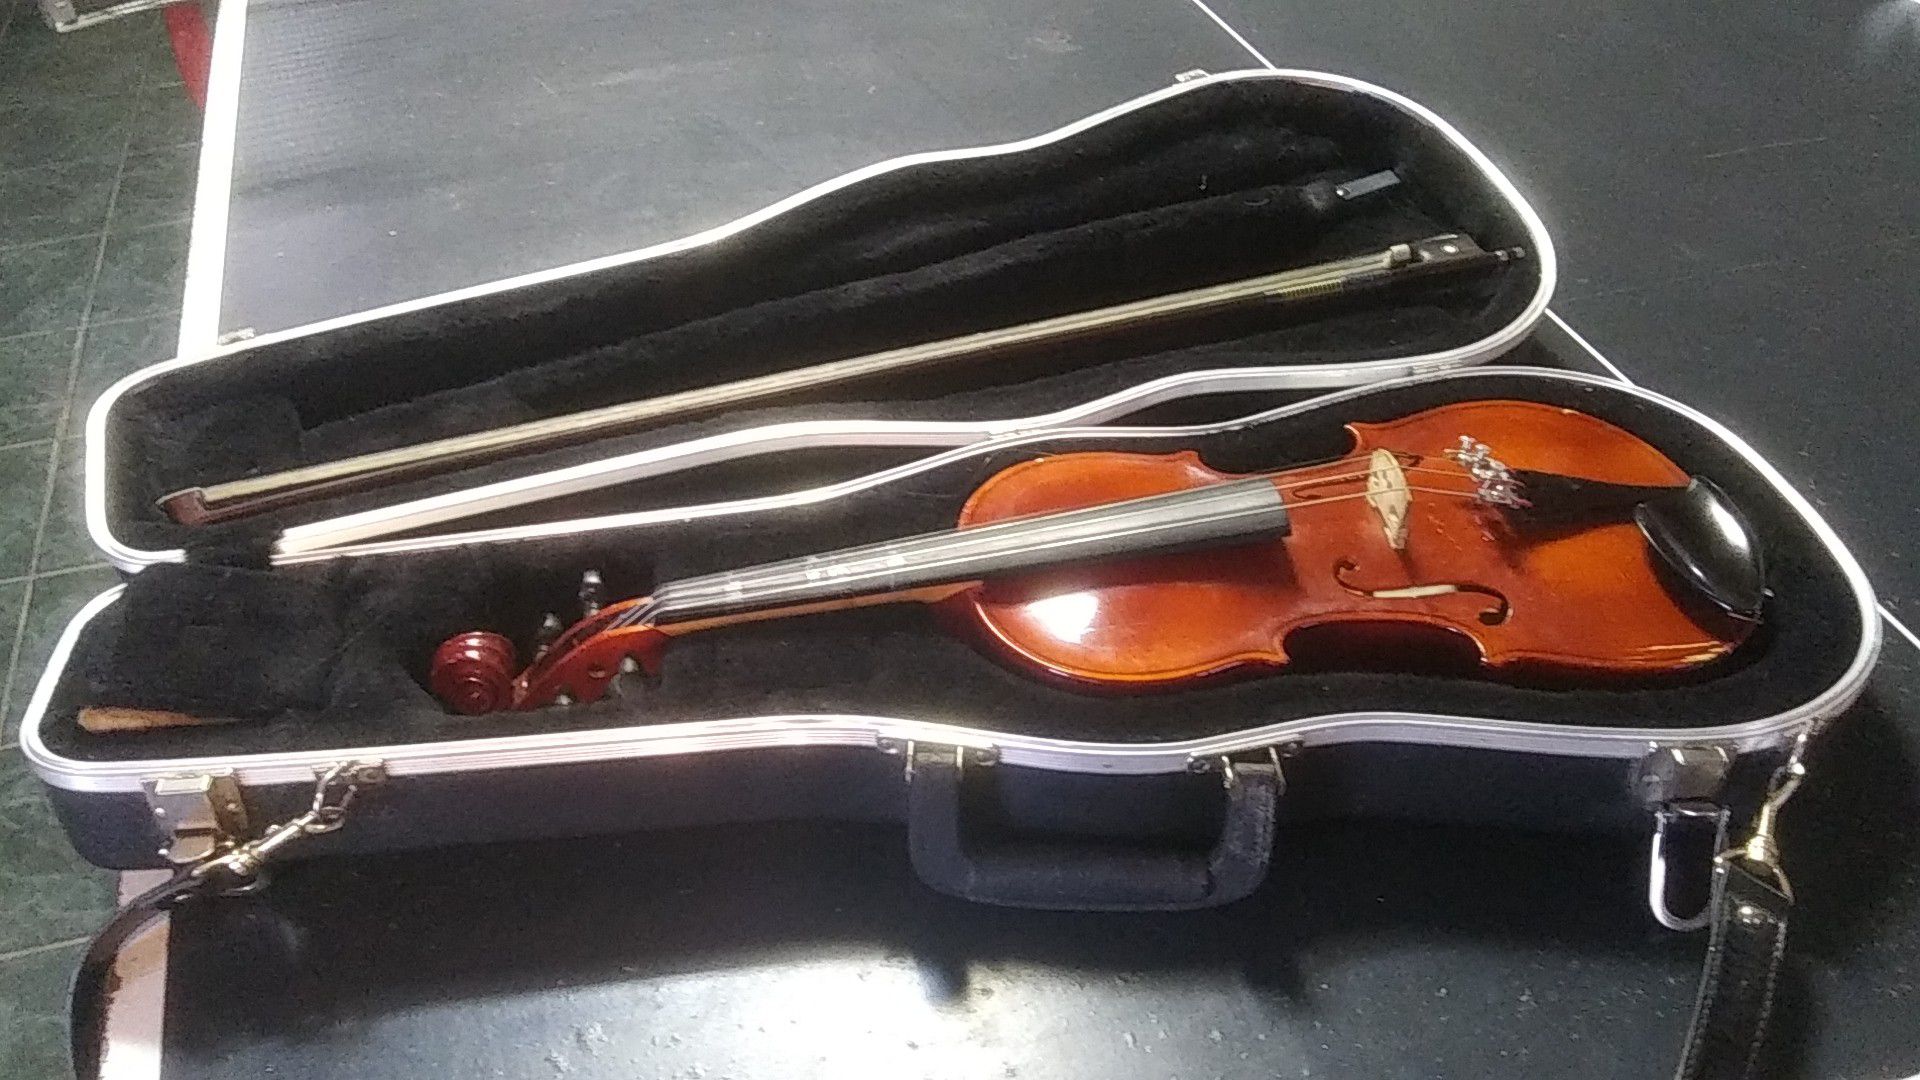 Violin and Case